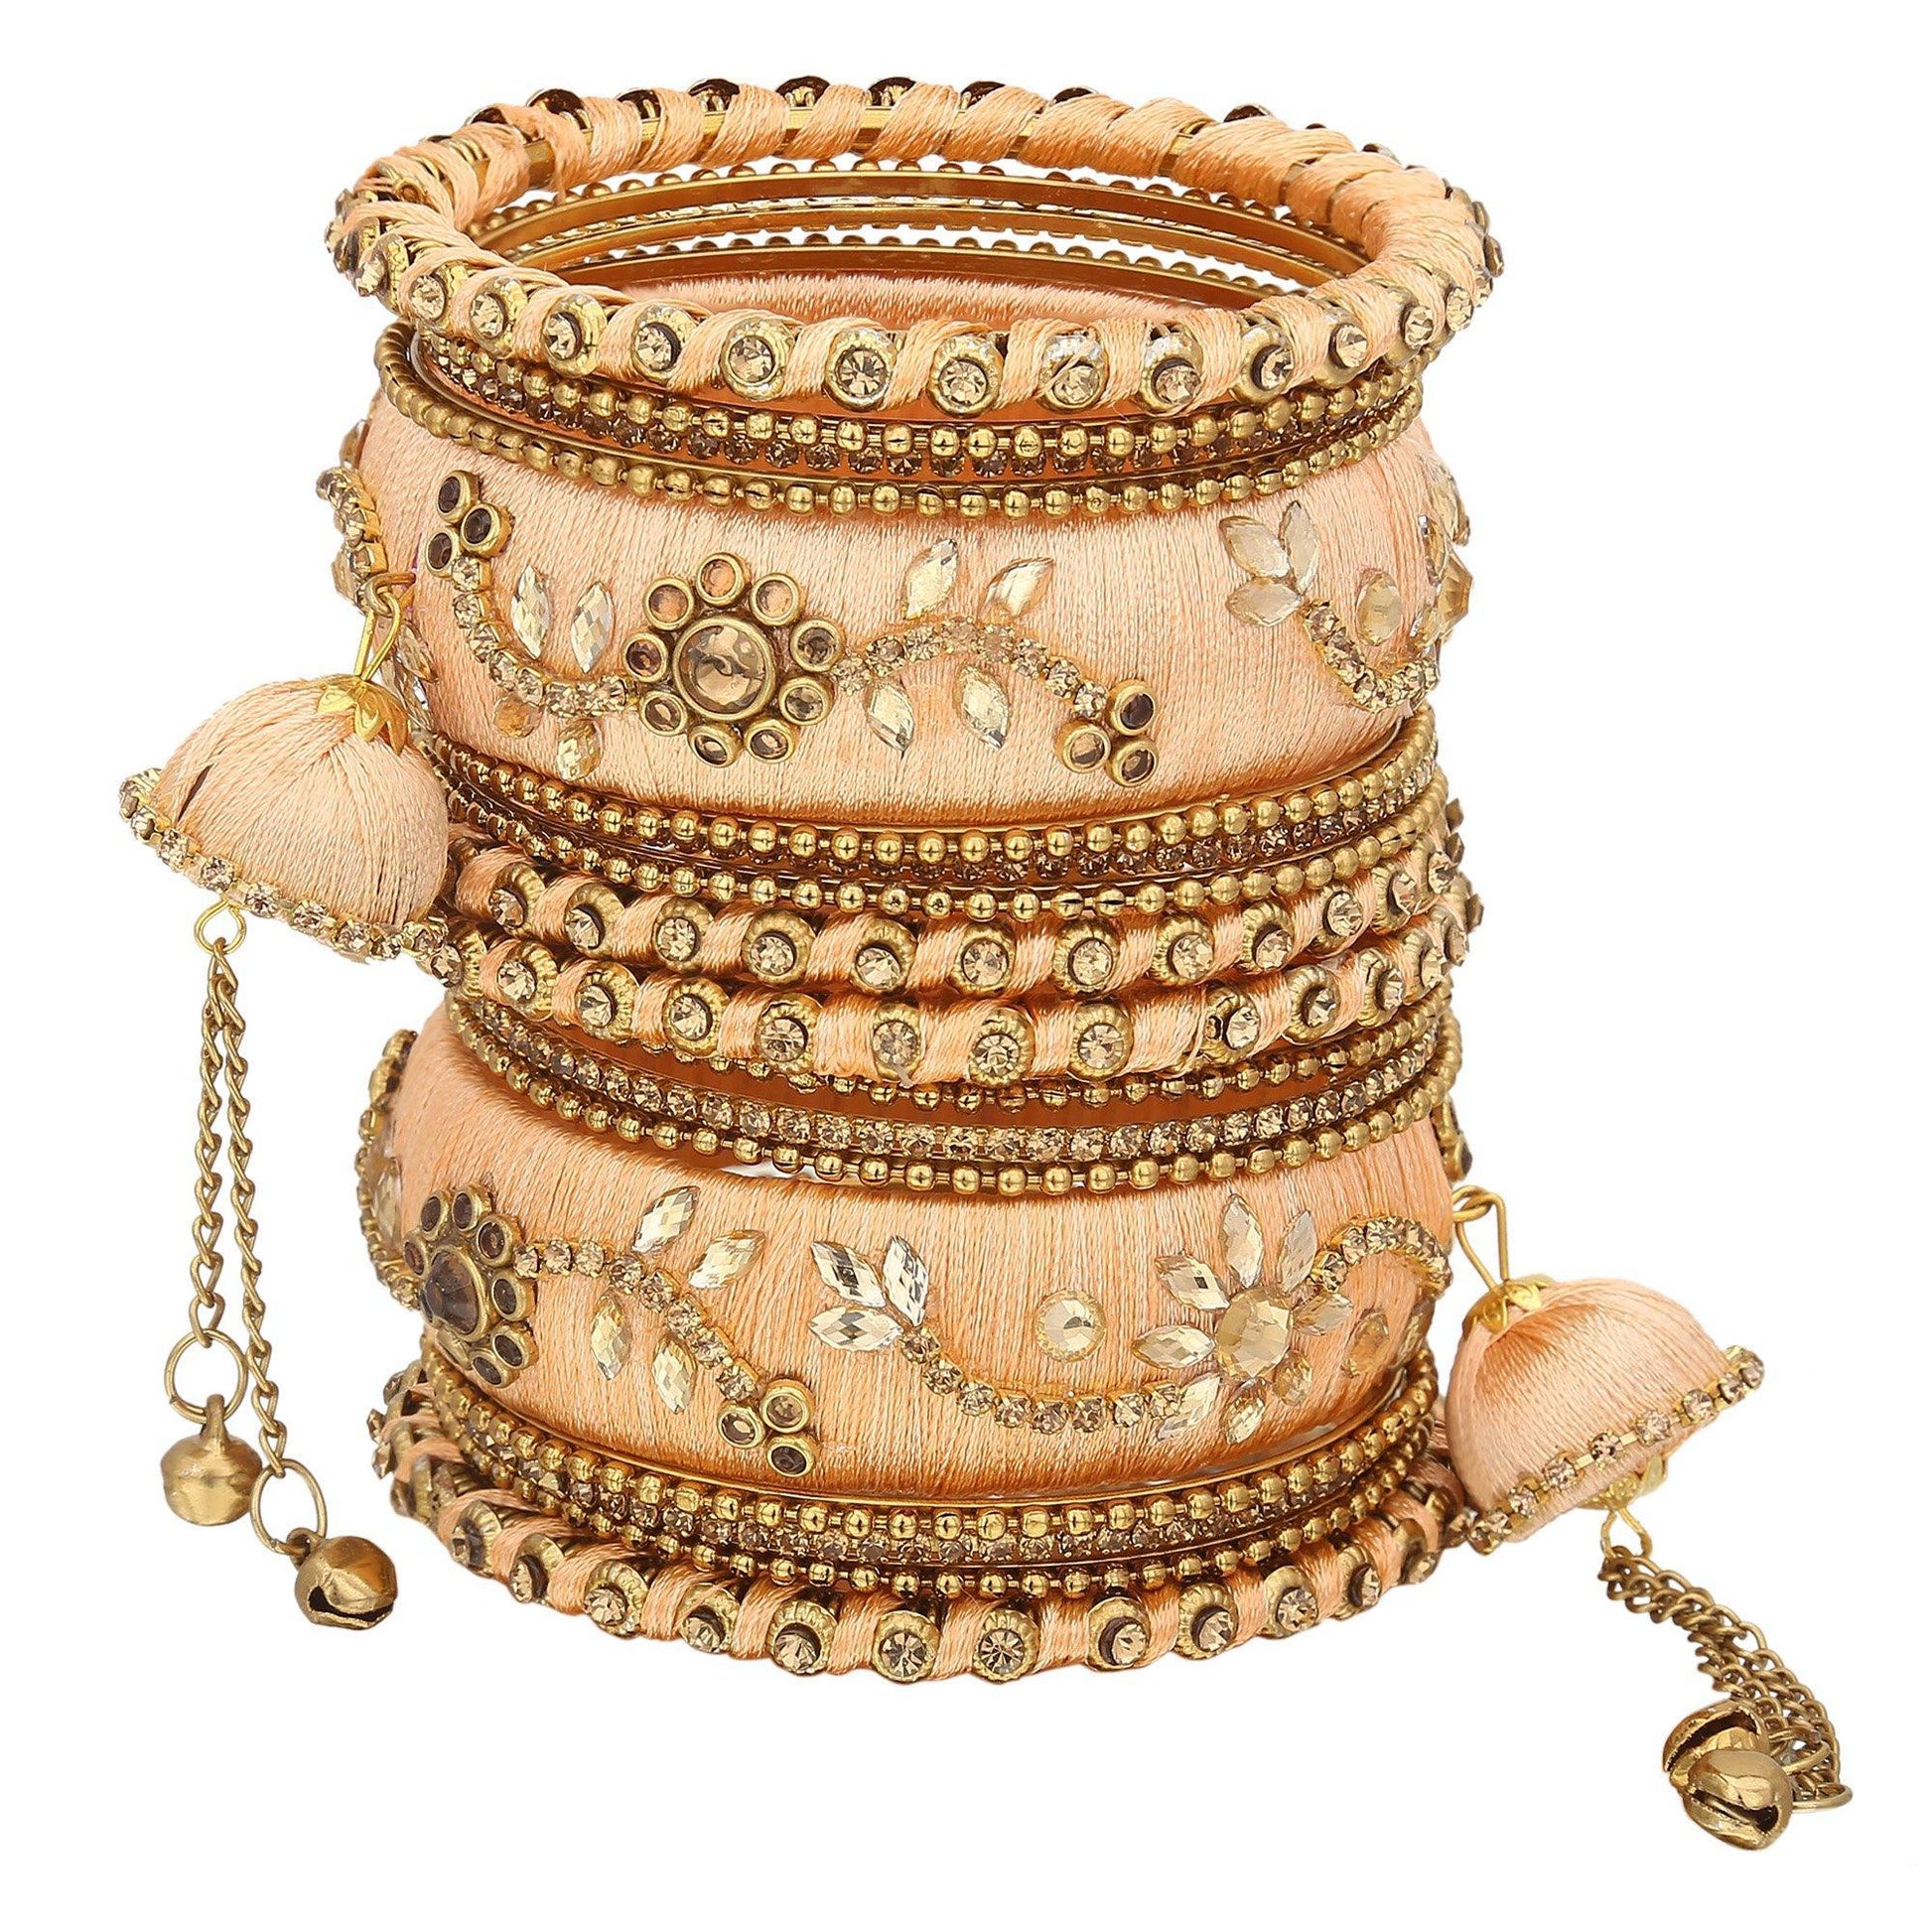 sukriti party wear silk thread tassel latkan peach bangles jewelry for girls & women – set of 18